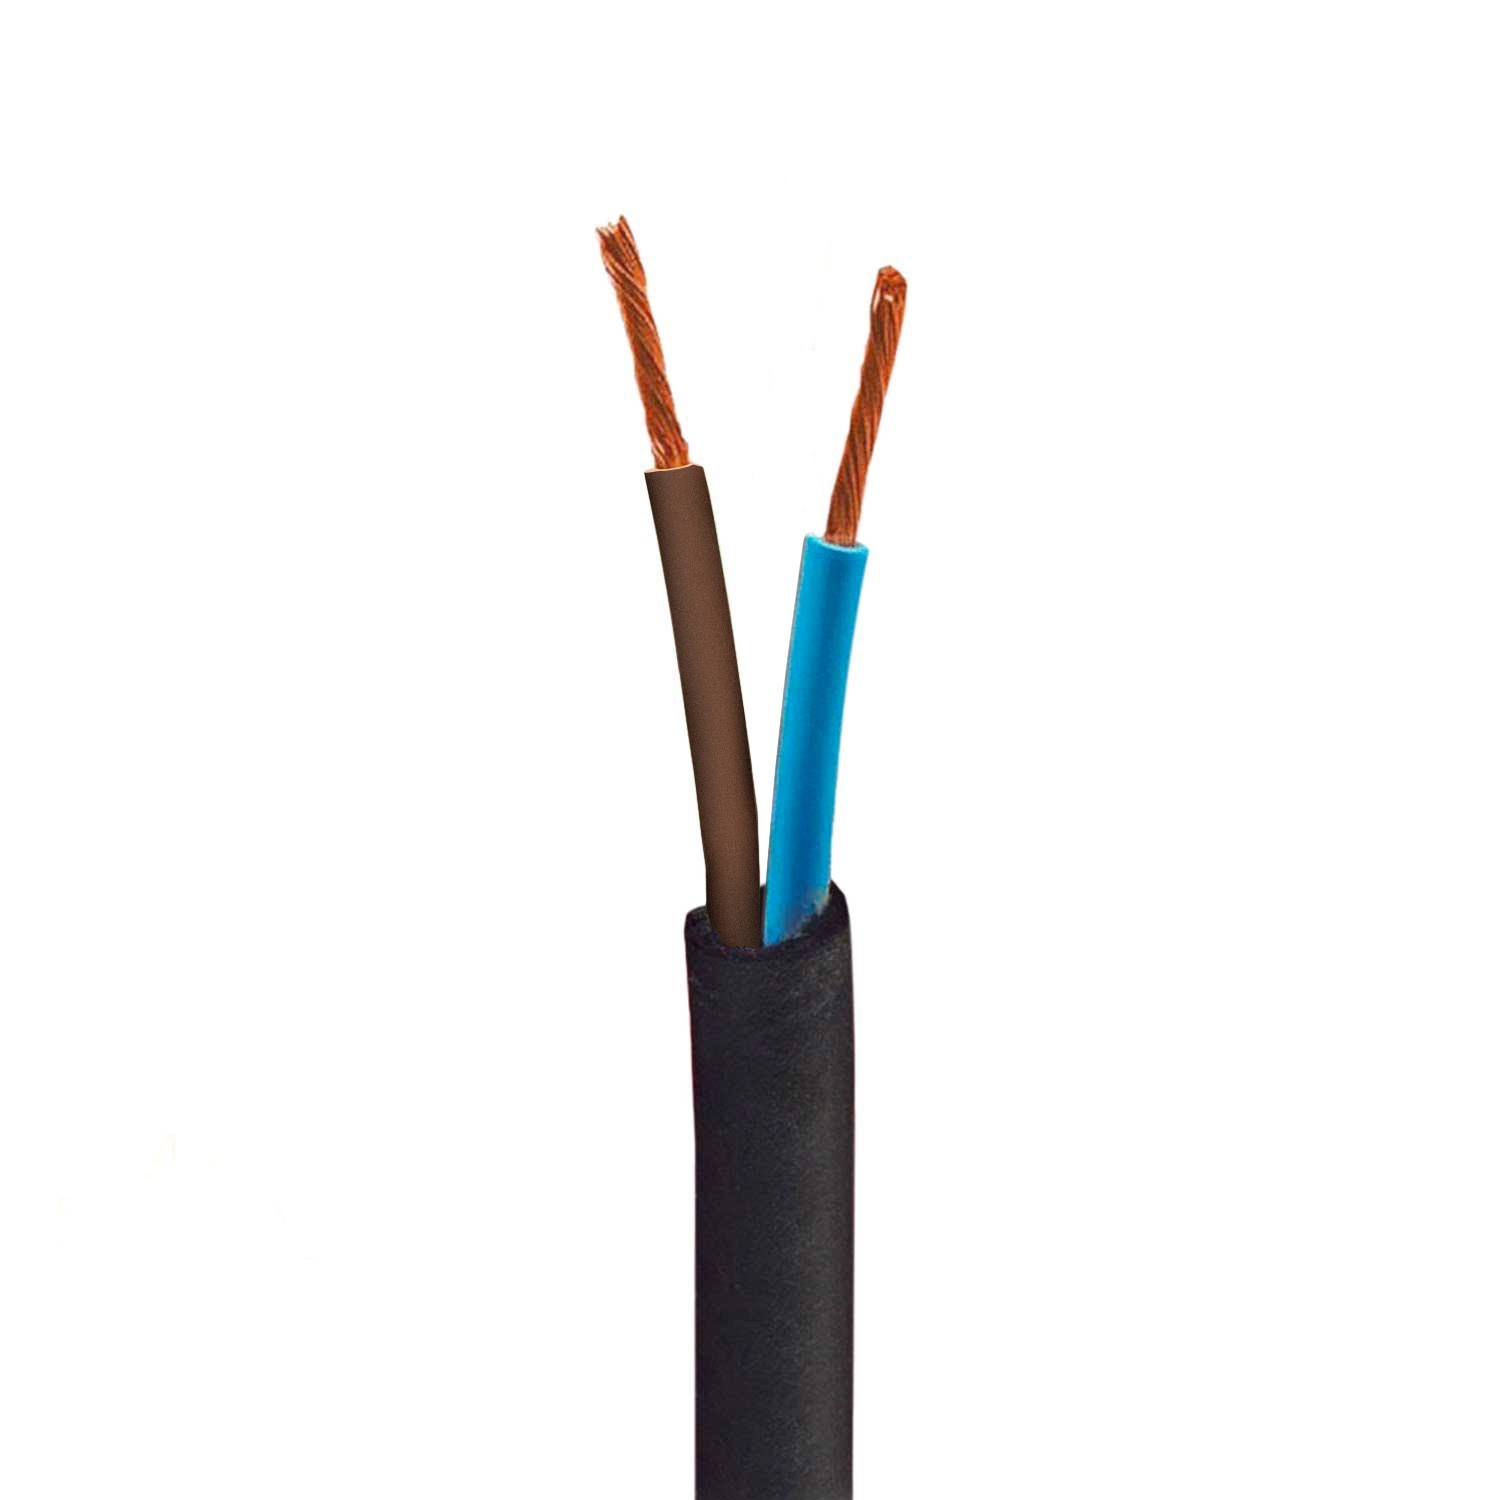 Outdoor-Elektrokabel mit Textilummantelung, Zick-Zack-Muster türkis SZ11,  rund, UV-beständig - kompatibel mit Eiva Outdoor IP65